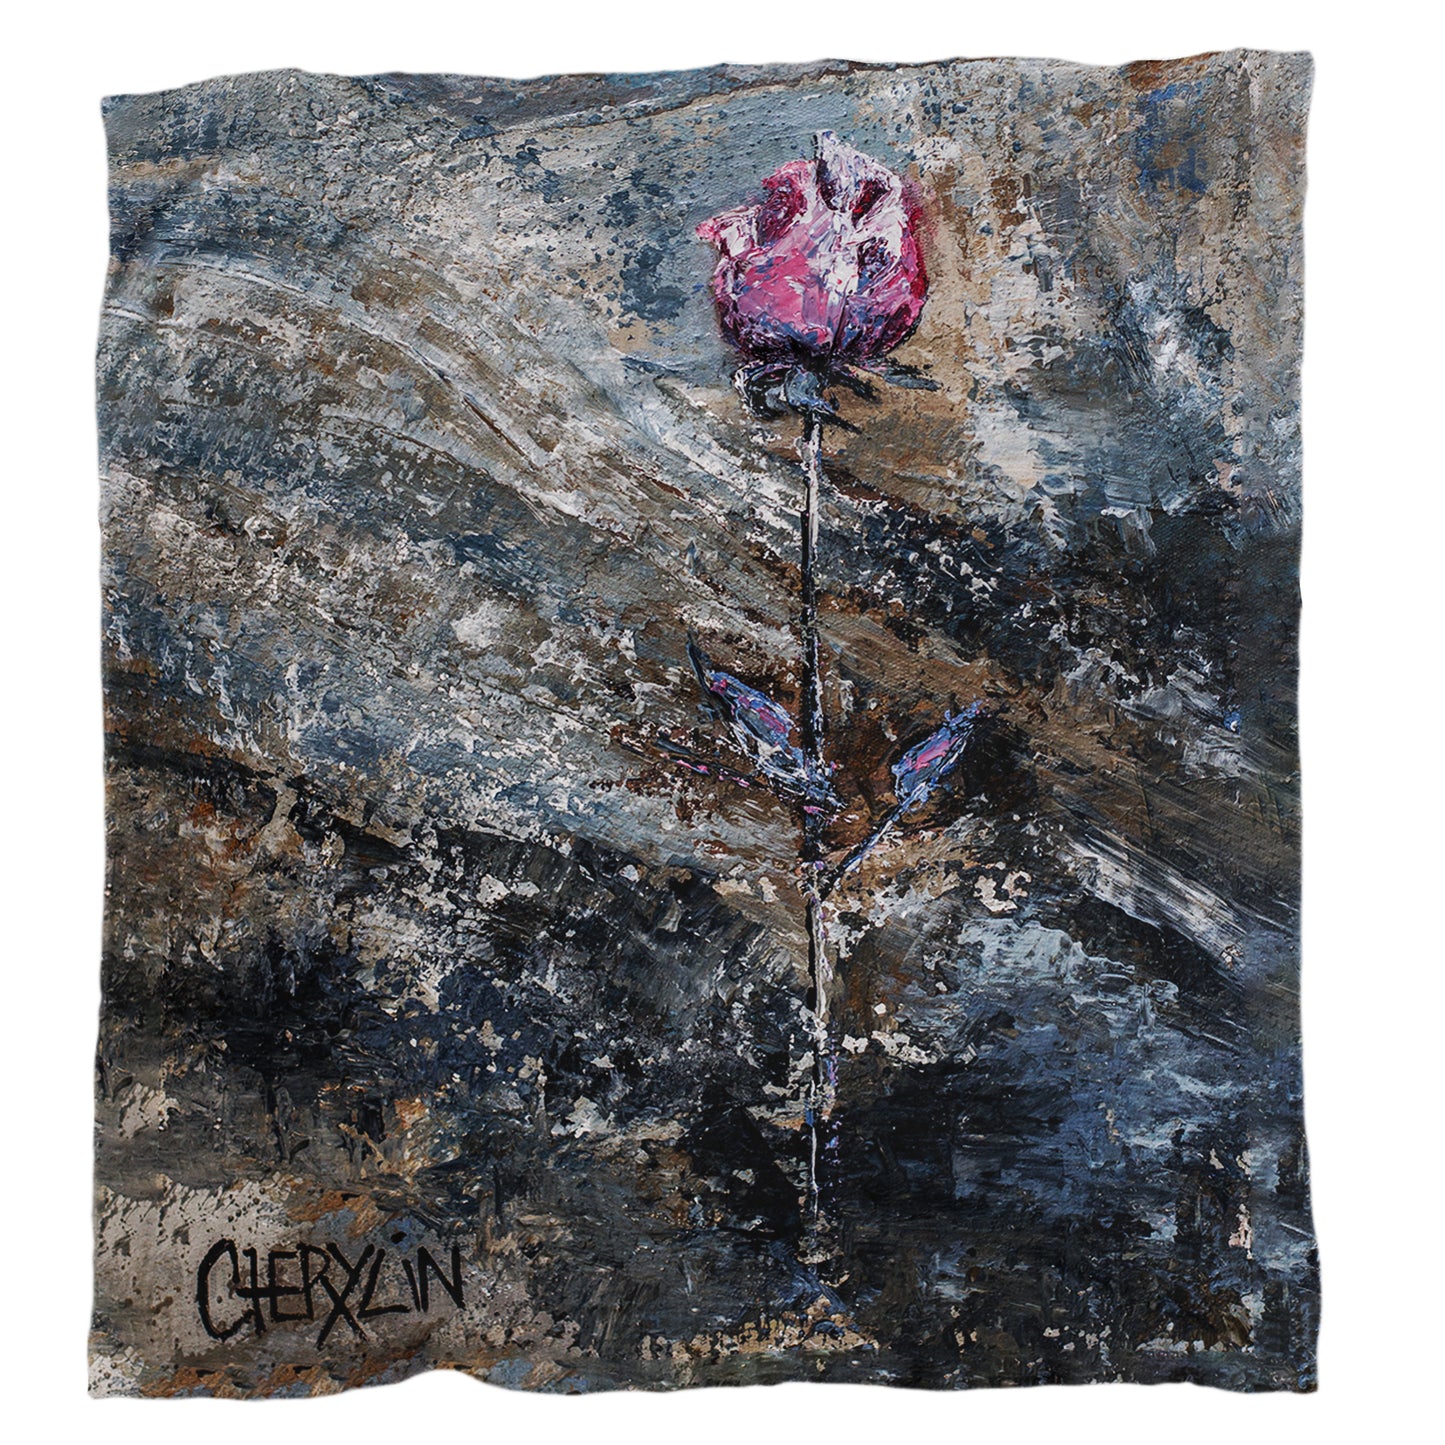 Single Rose Light Weight Fleece Blanket By Cherylin Louw